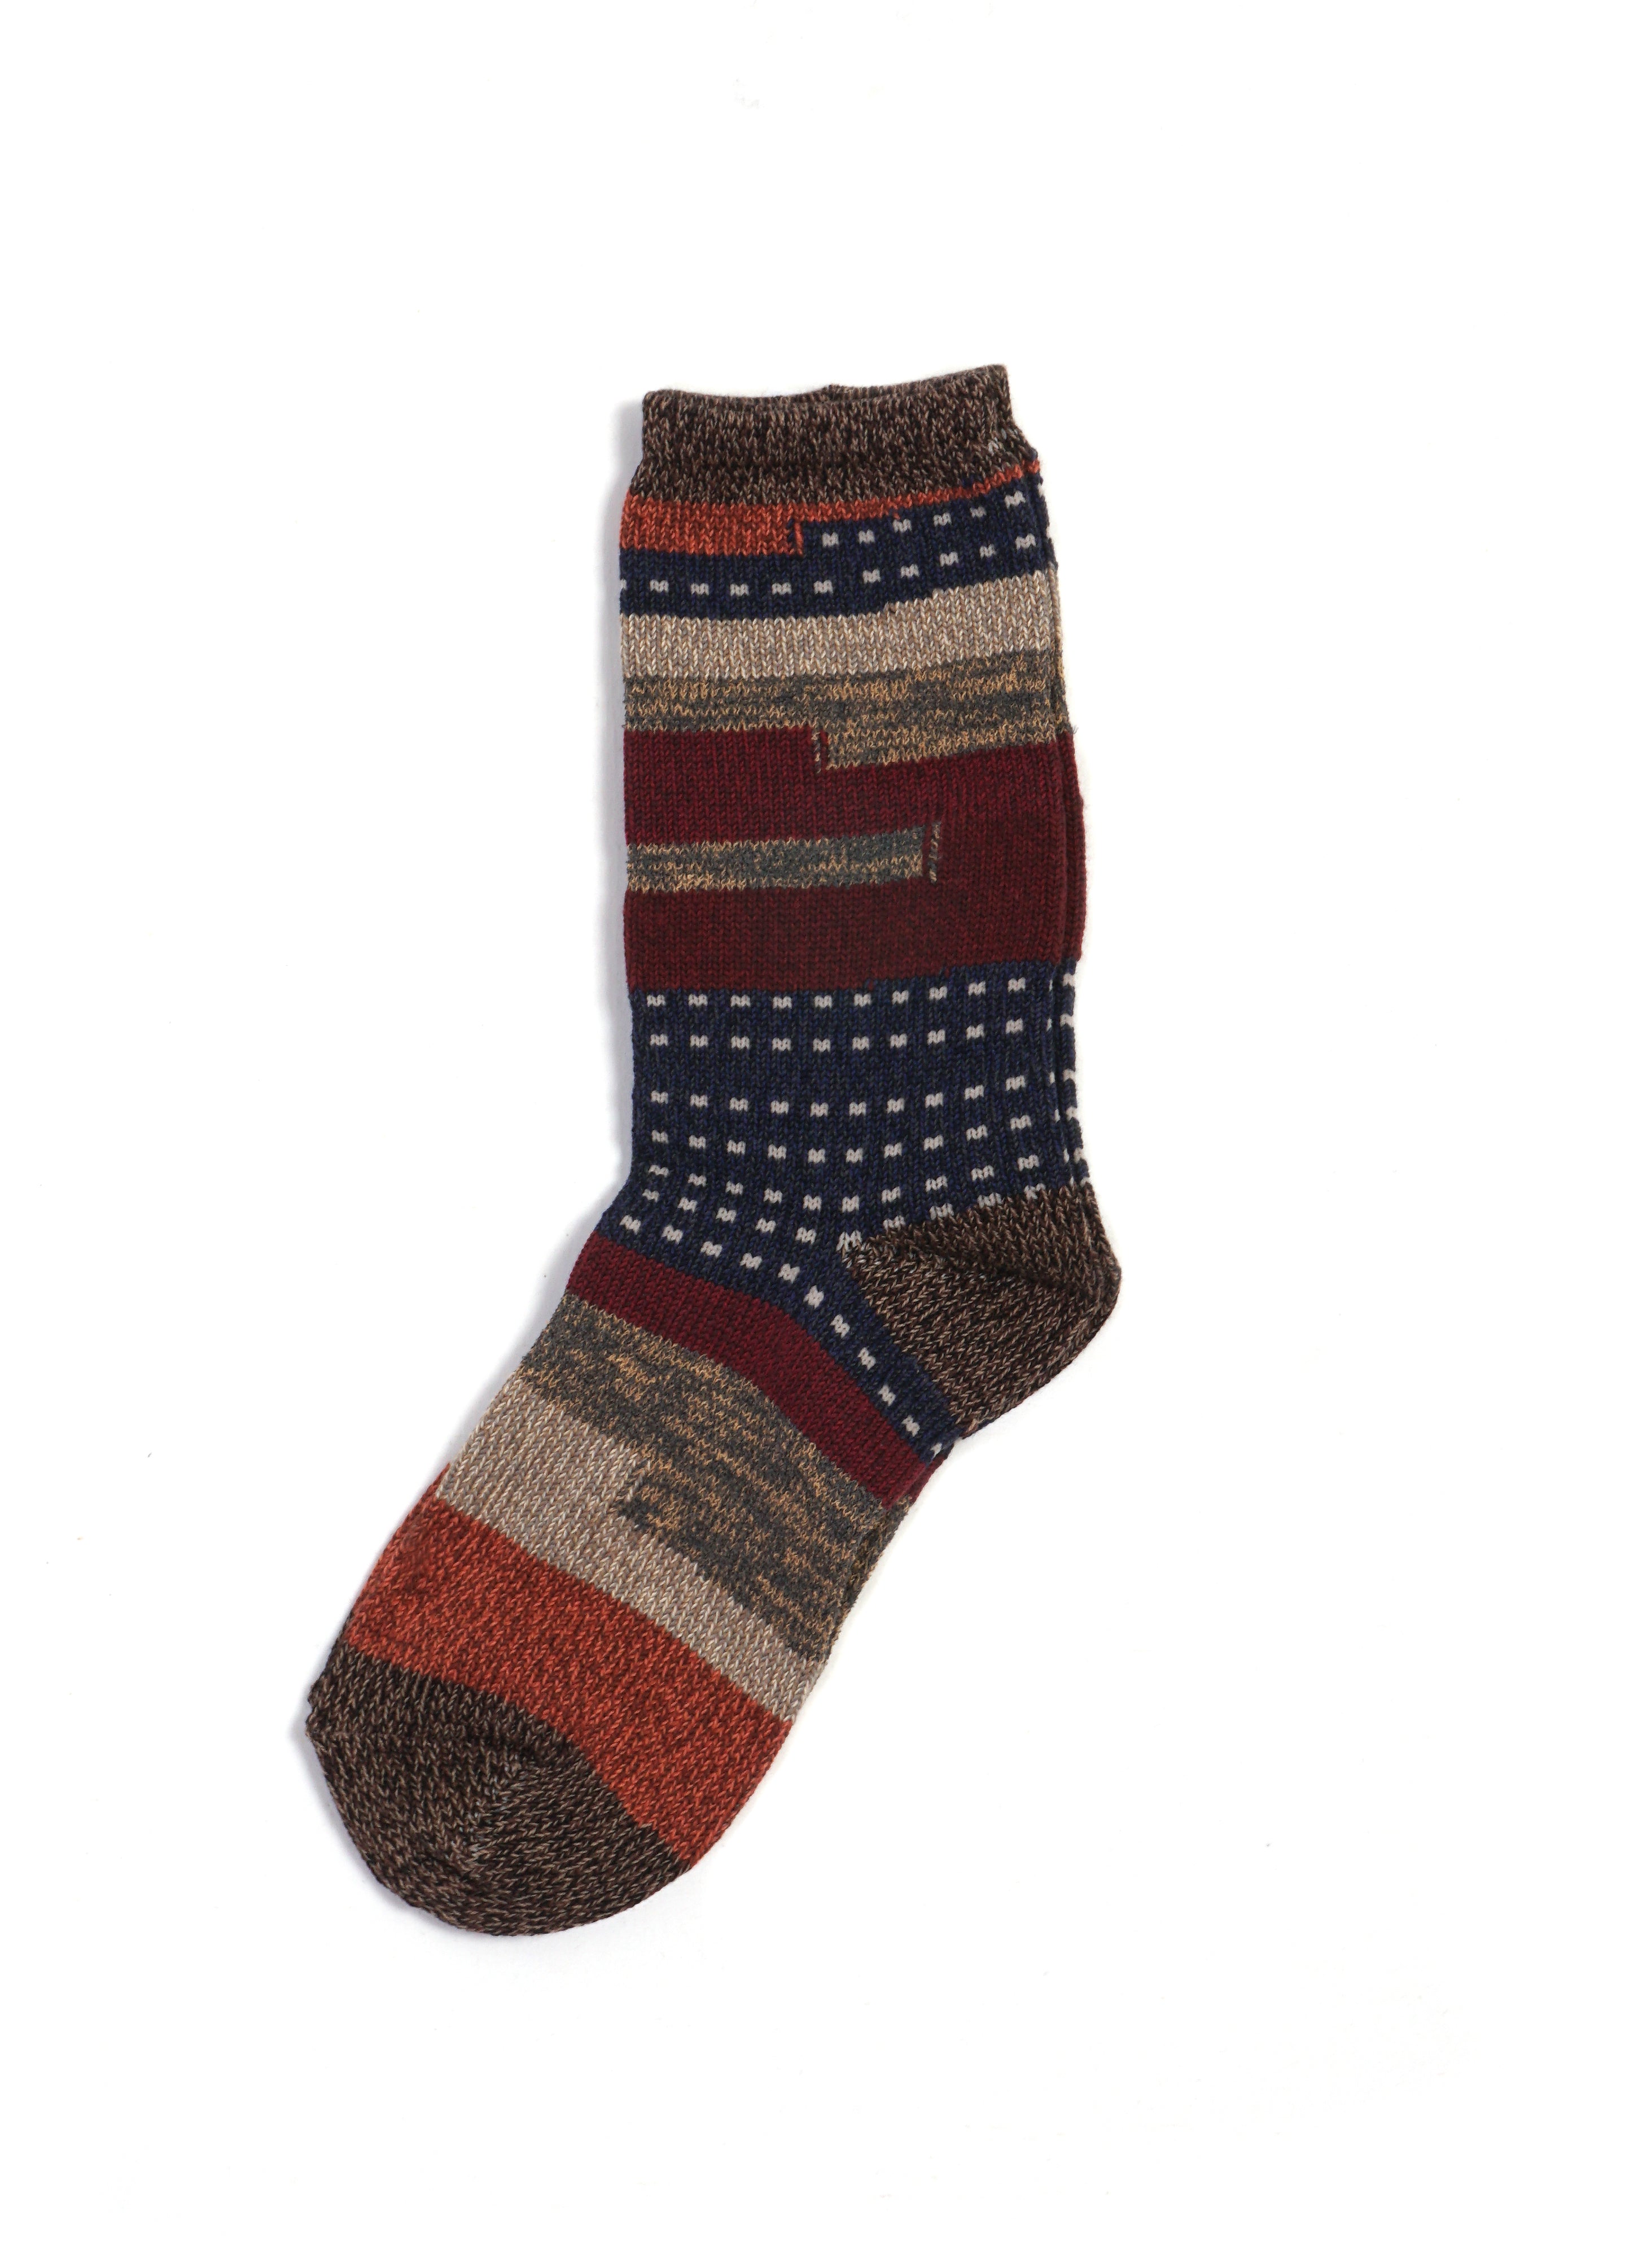 KOMON KOGIN | 84 Yarns Patchwork Socks | Burgundy